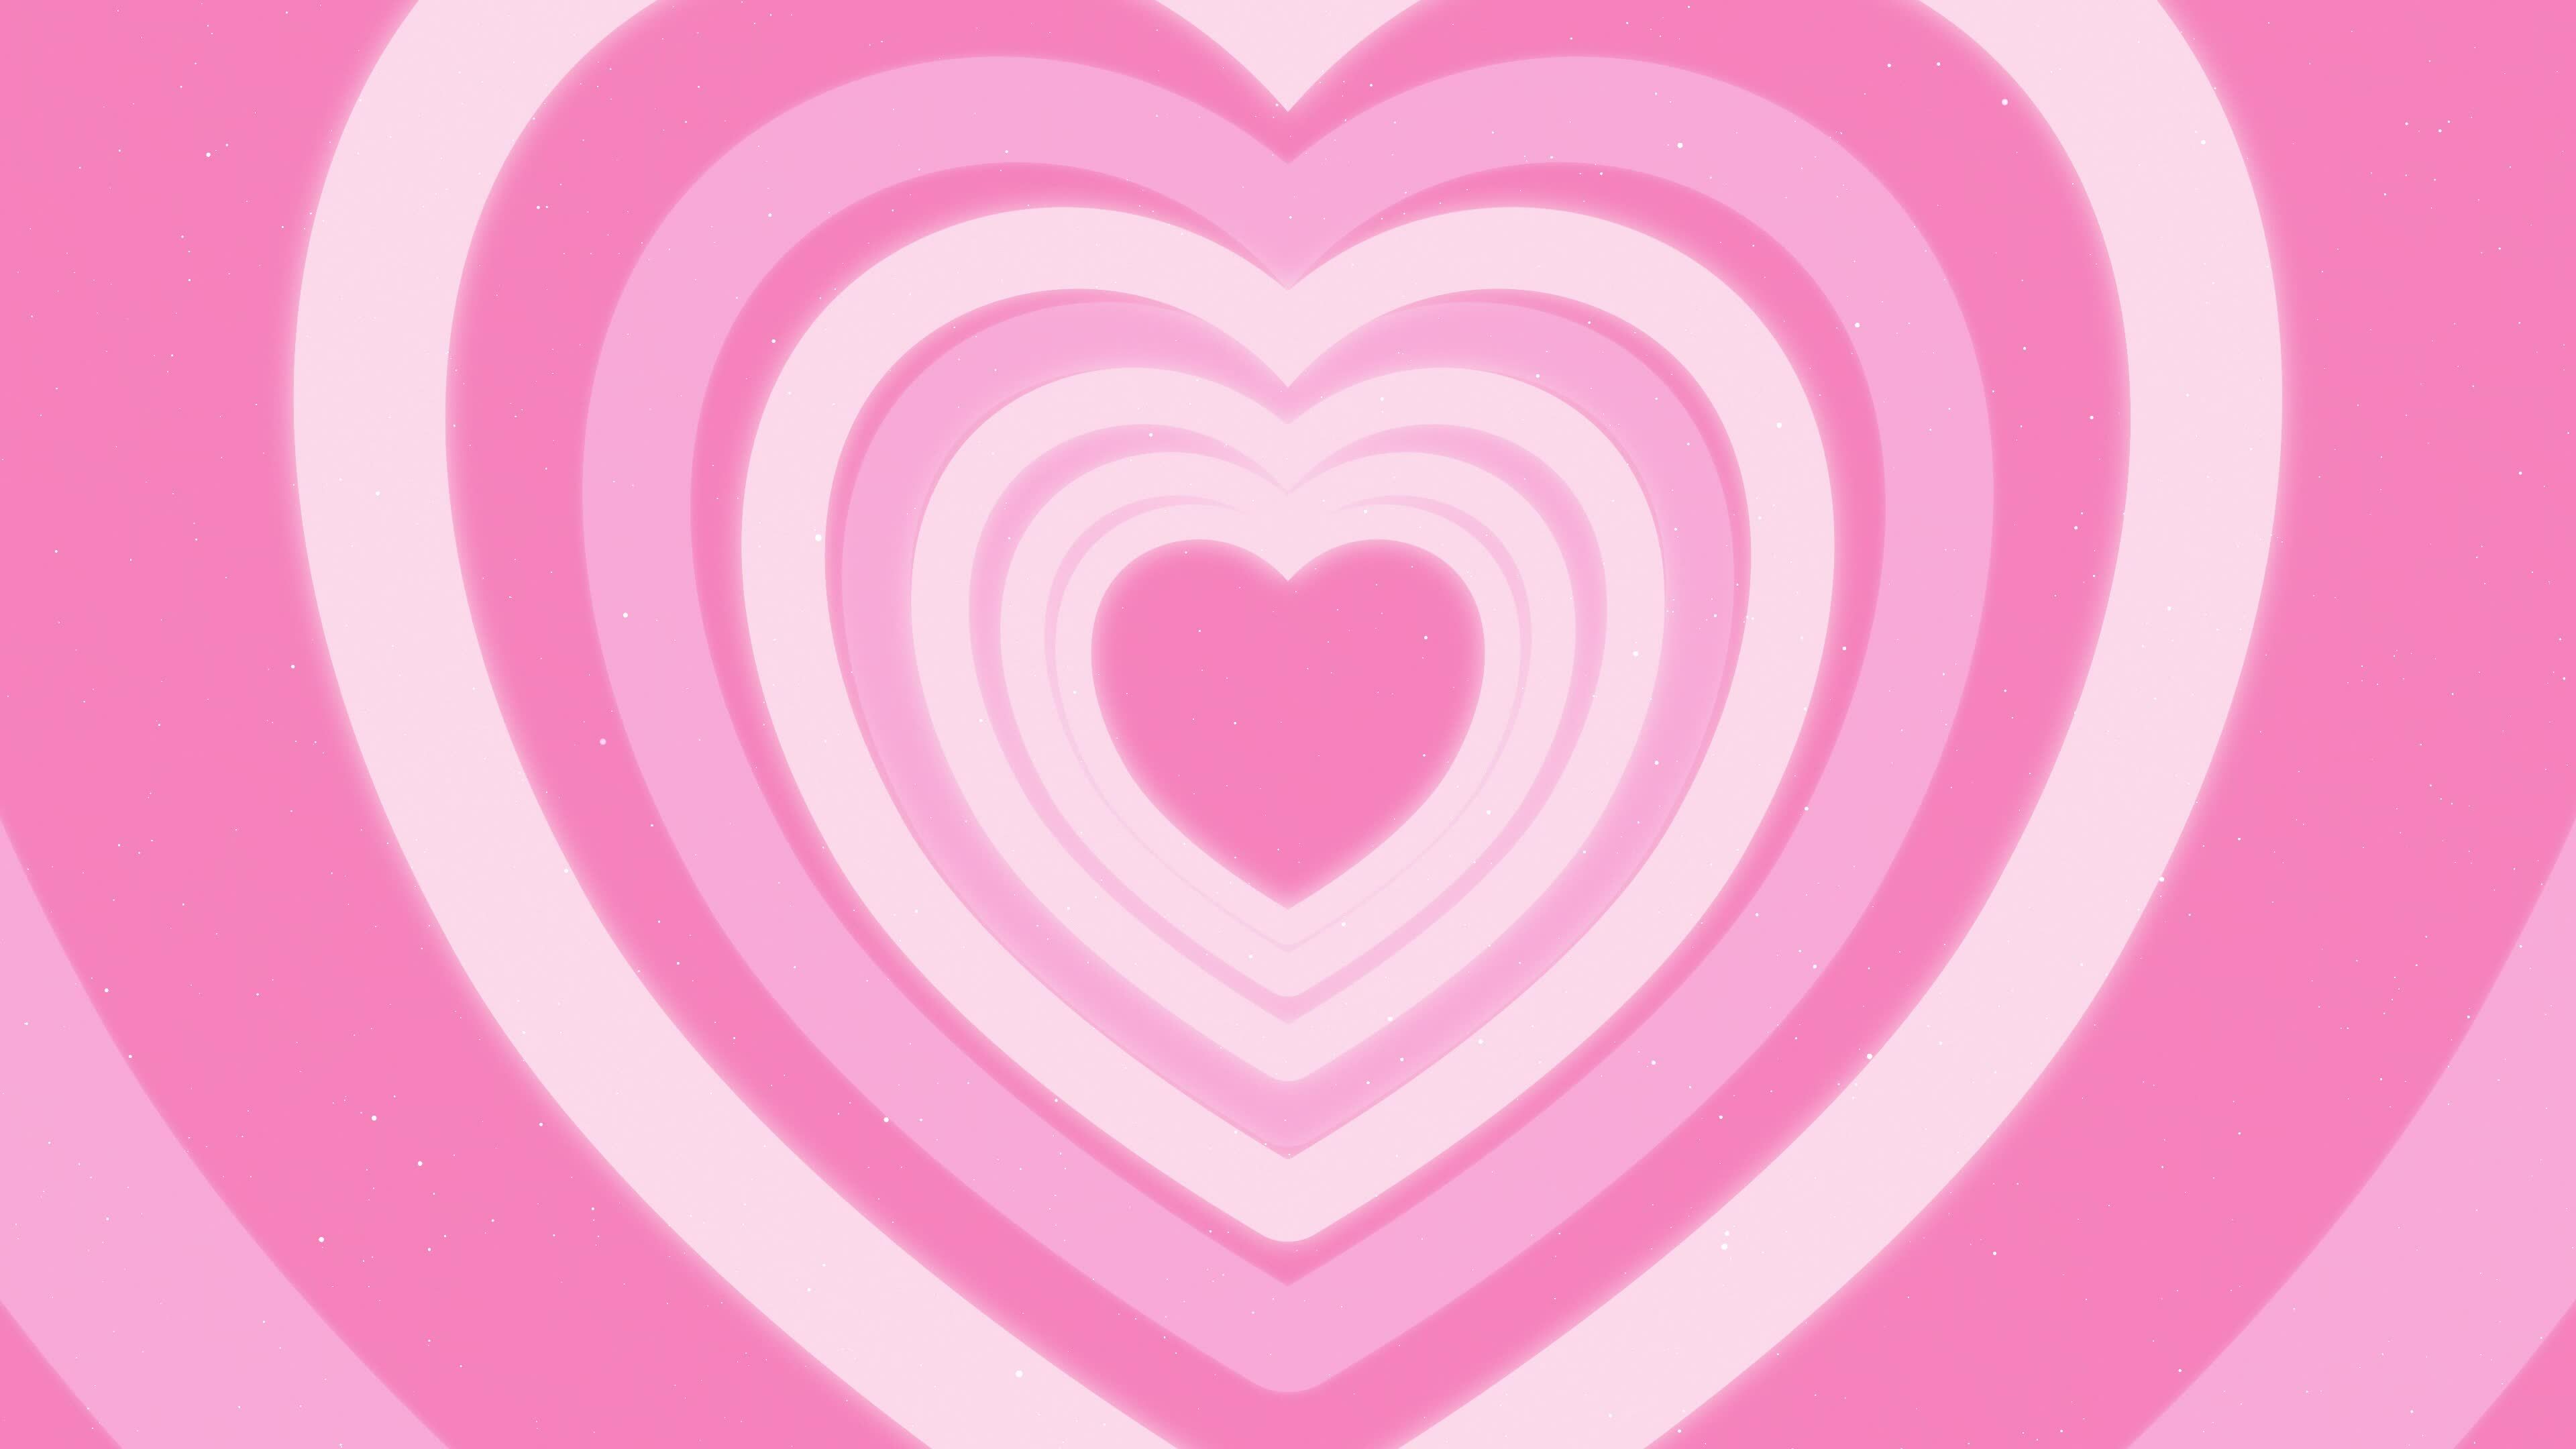 Aesthetics pastel pink heart tunnel on pink background 23687683 Stock ...